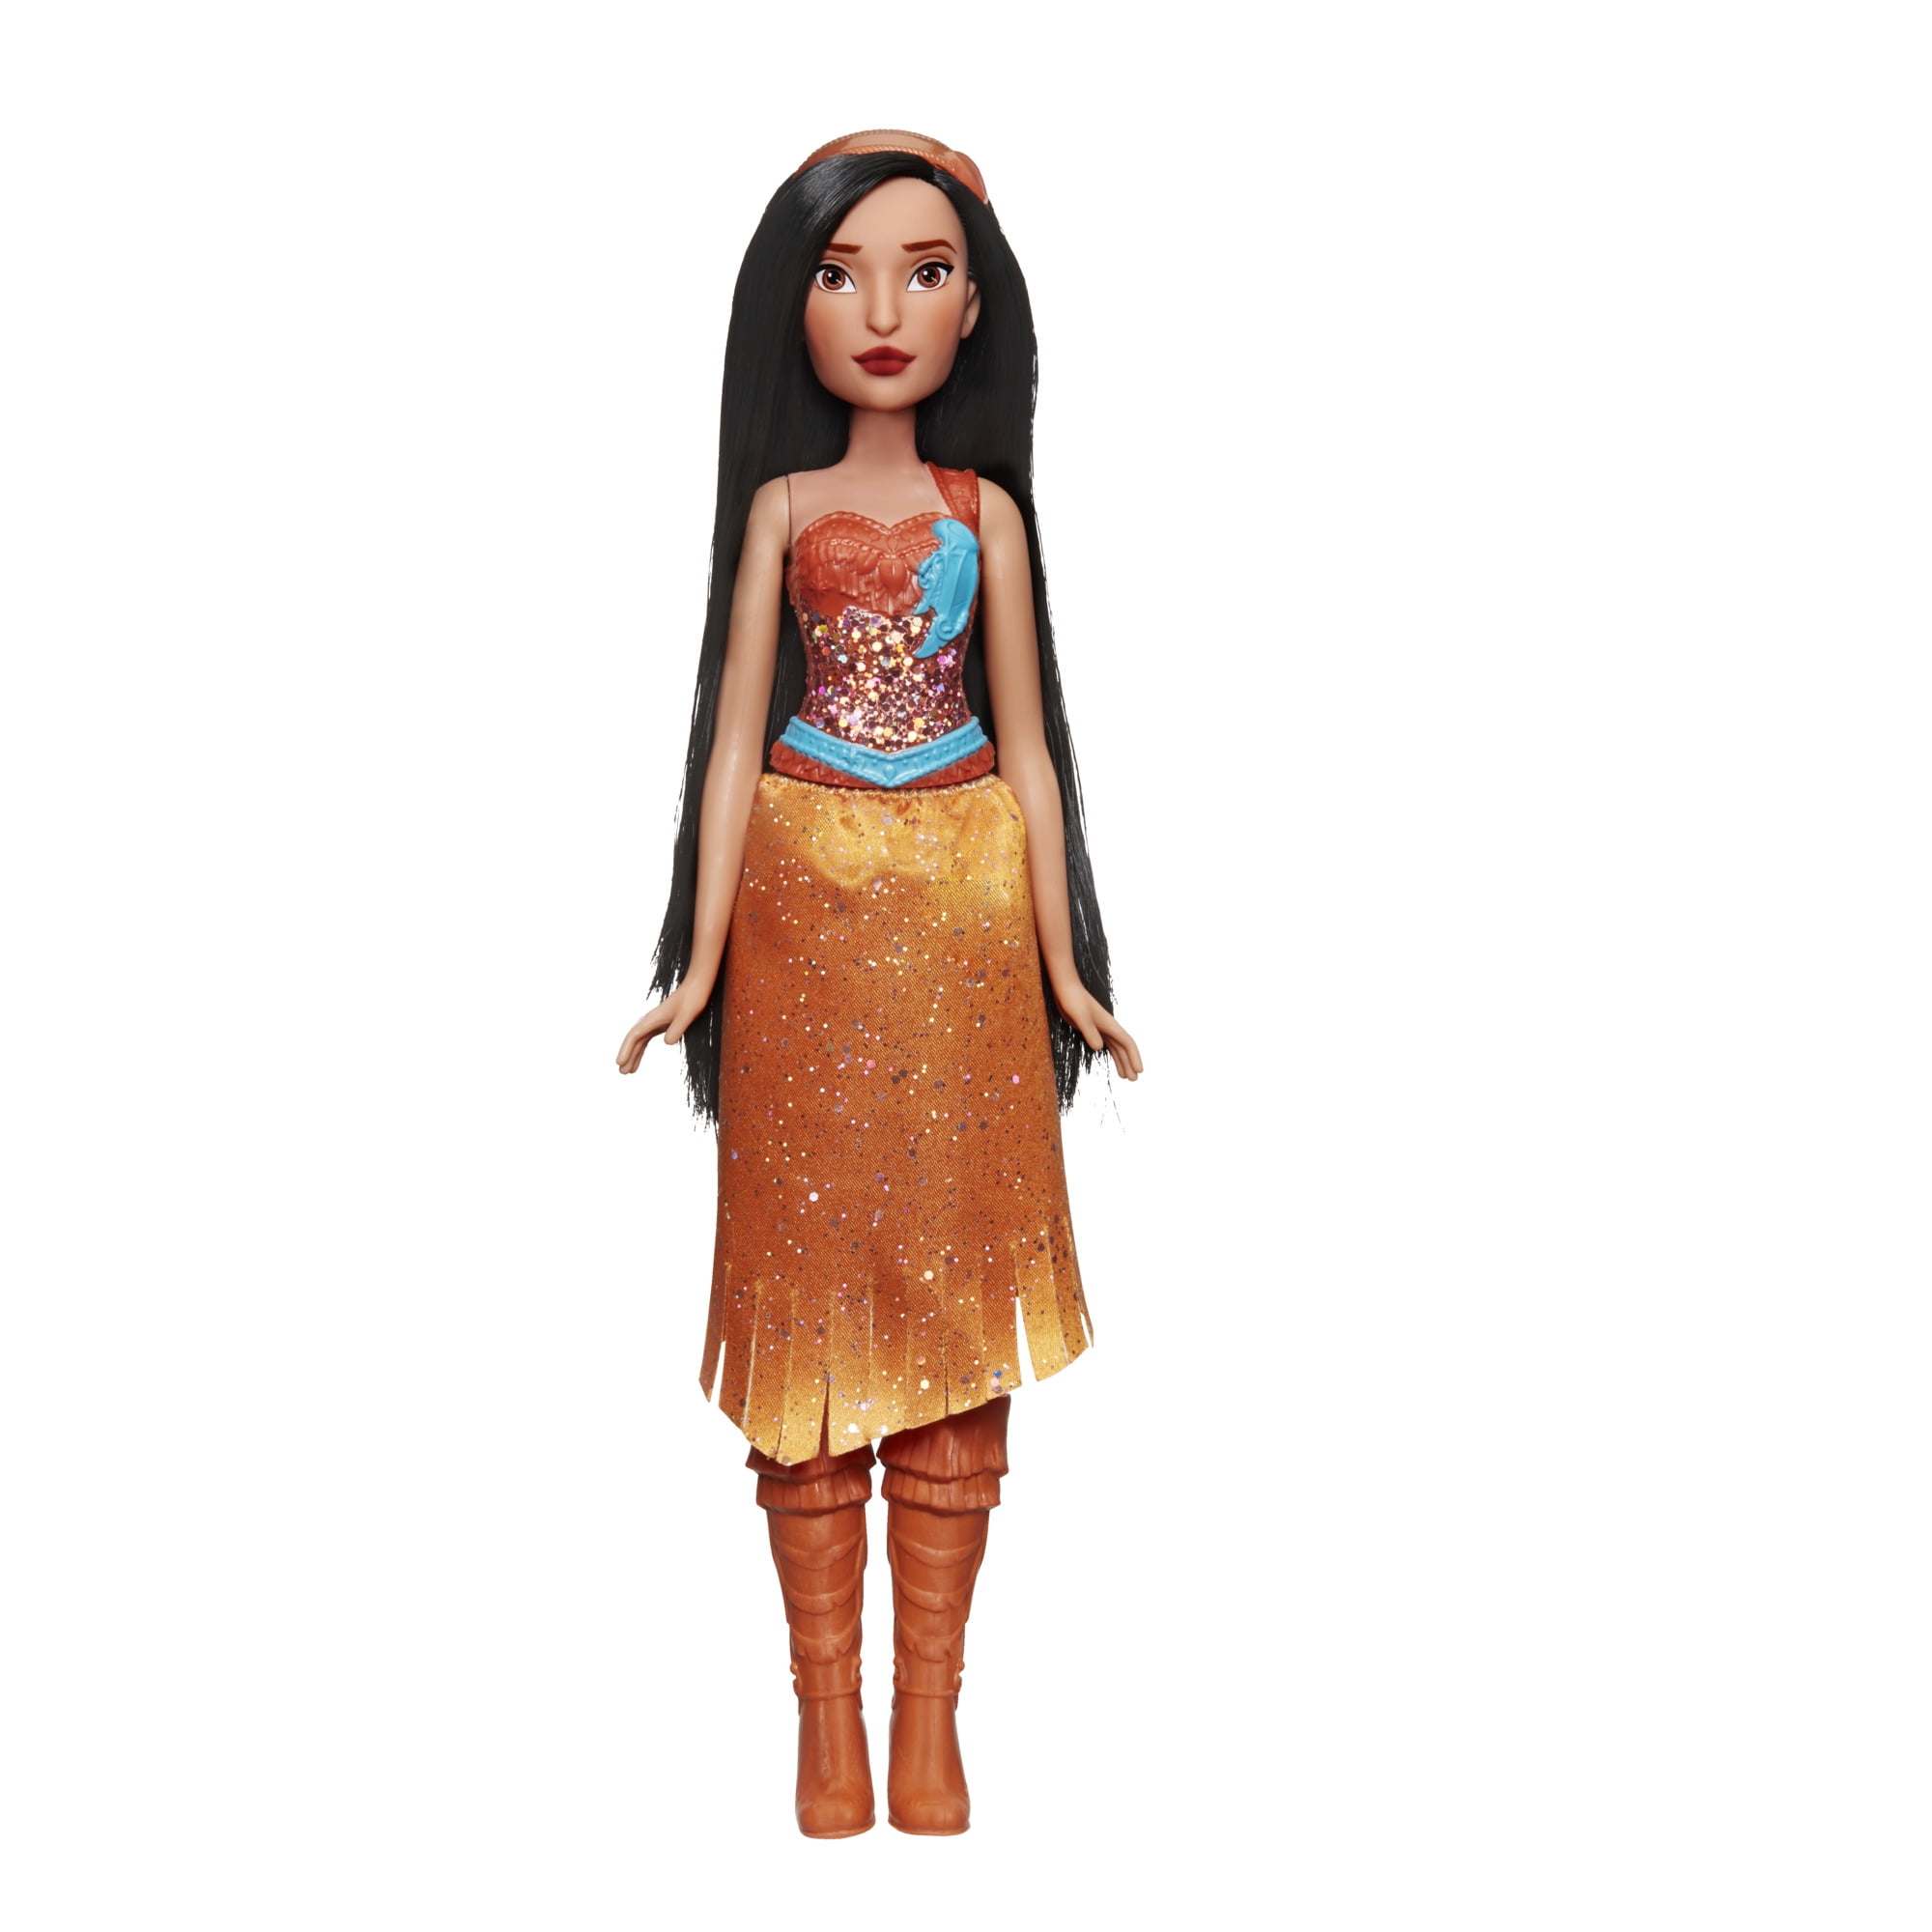 Disney Princess Shimmer Pocahontas Fashion Doll